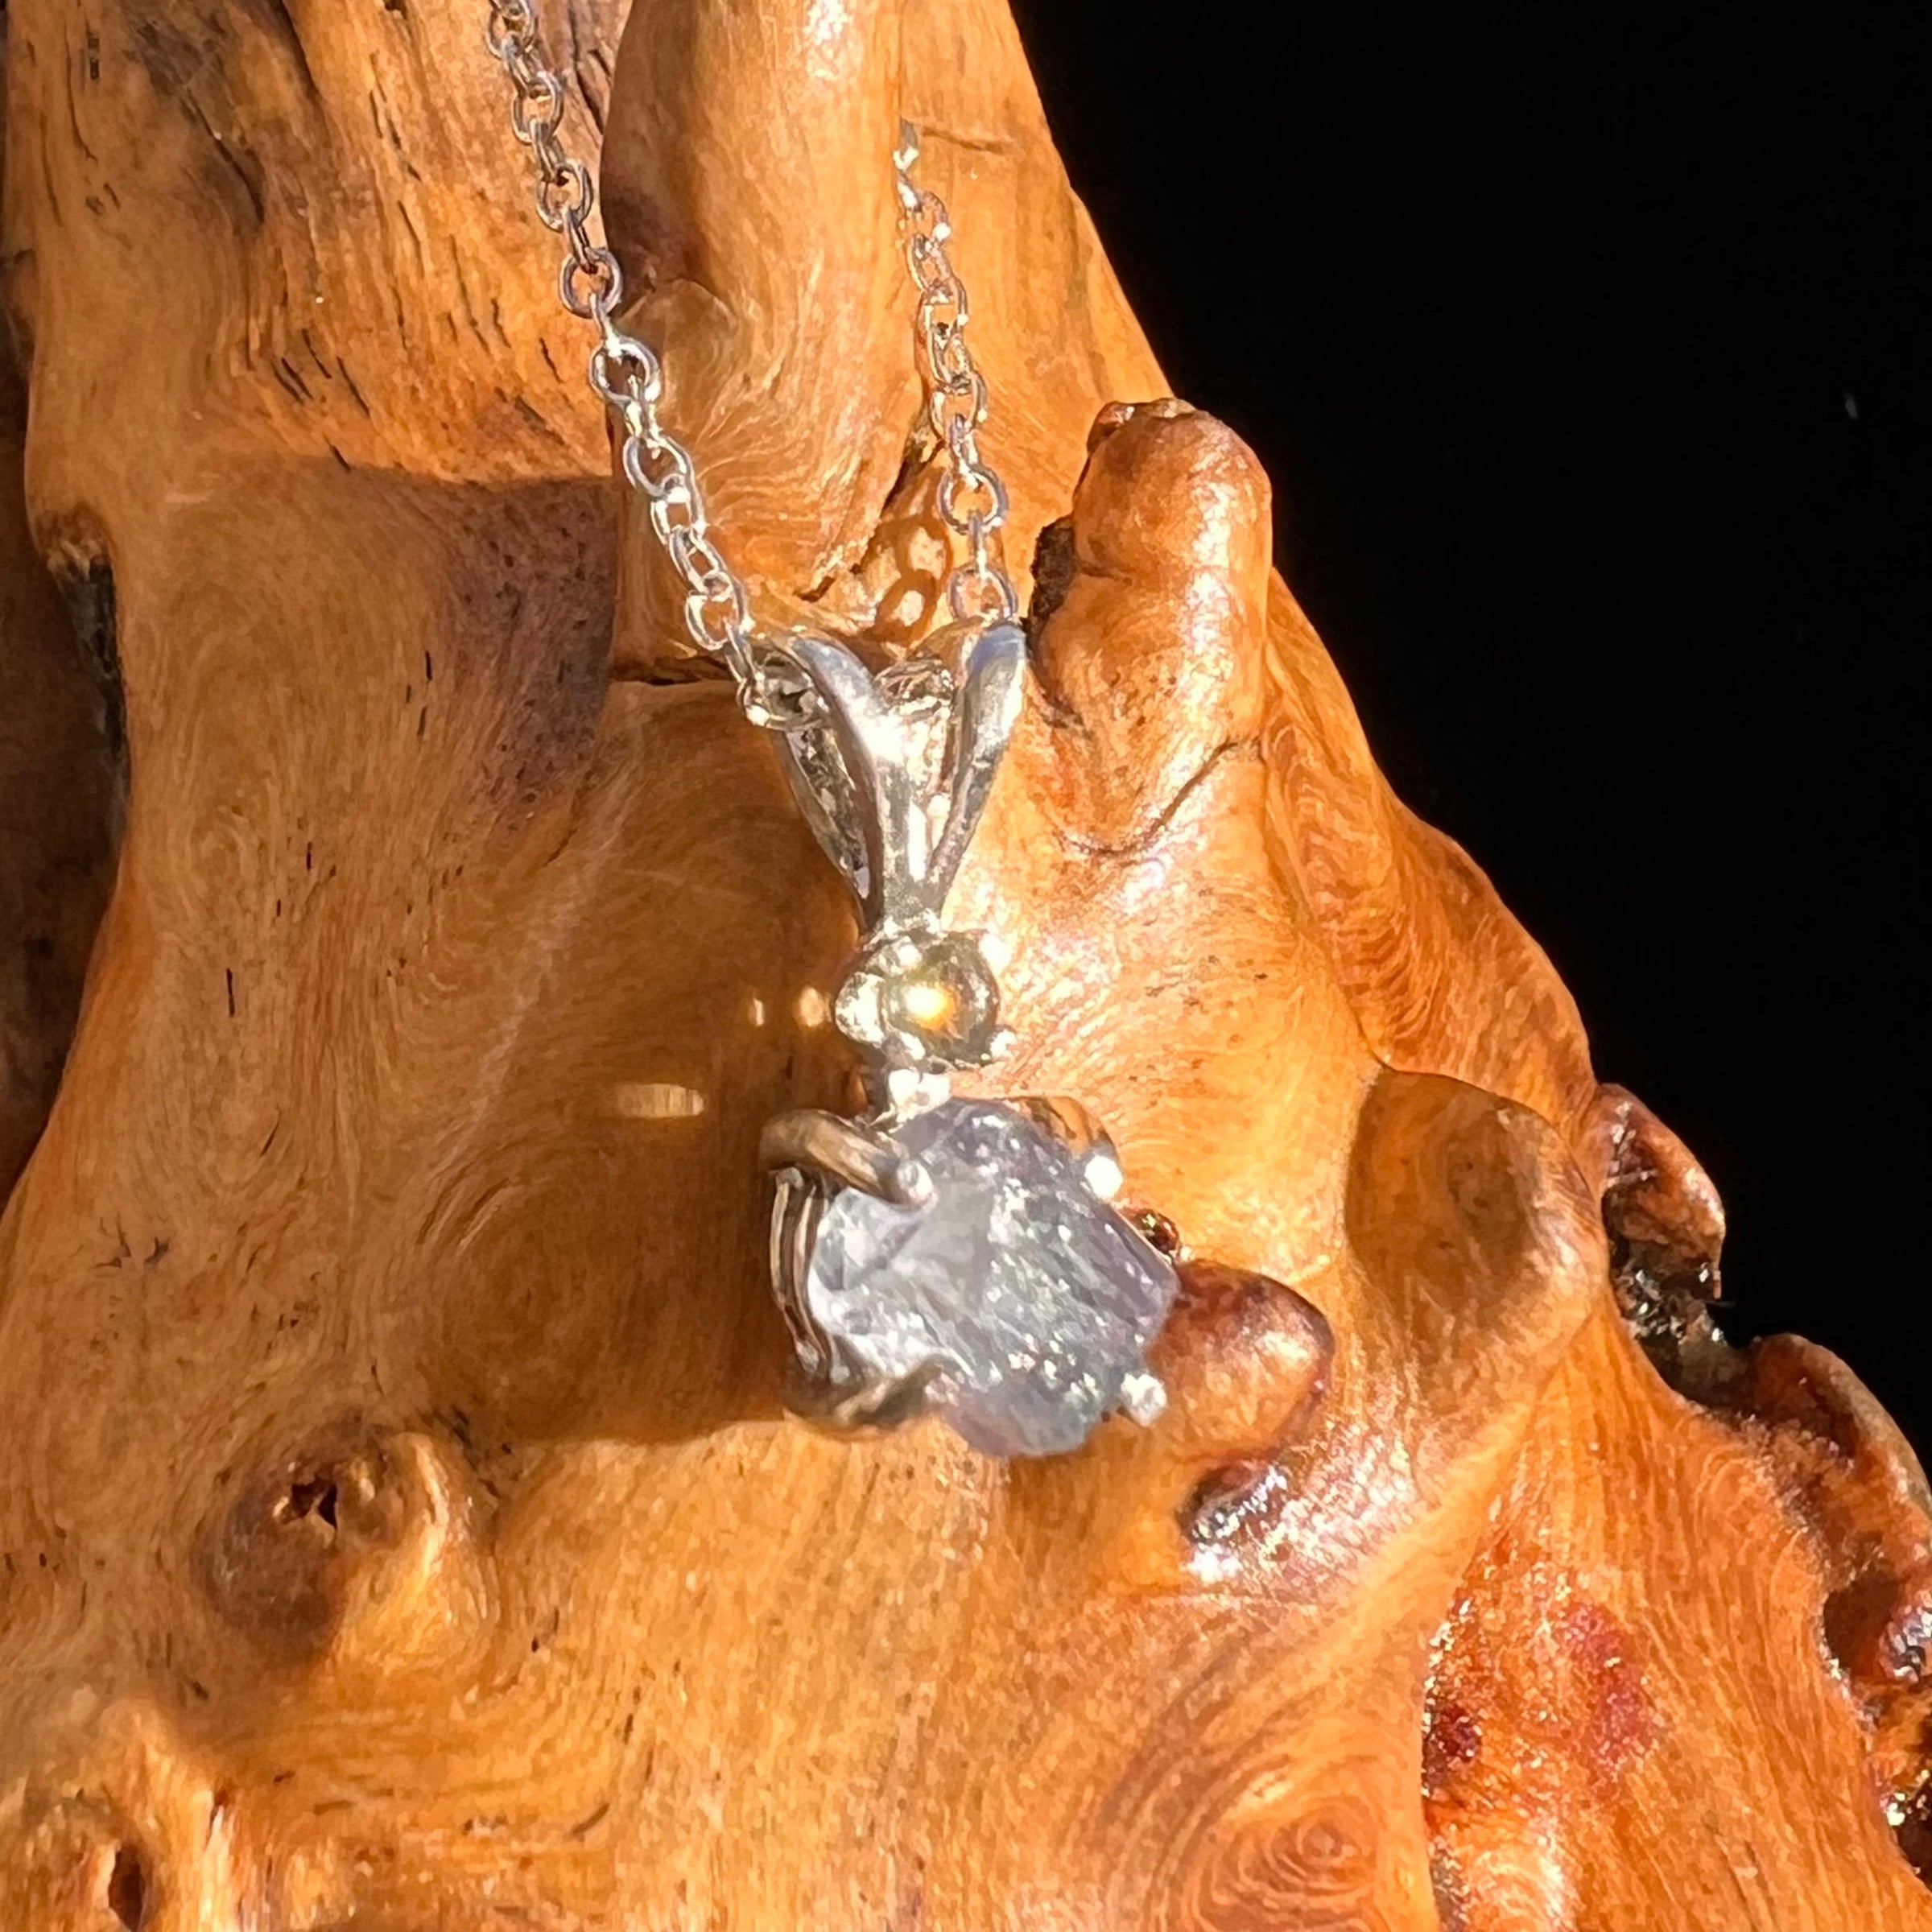 Blue Apatite & Moldavite Necklace Sterling #5984-Moldavite Life